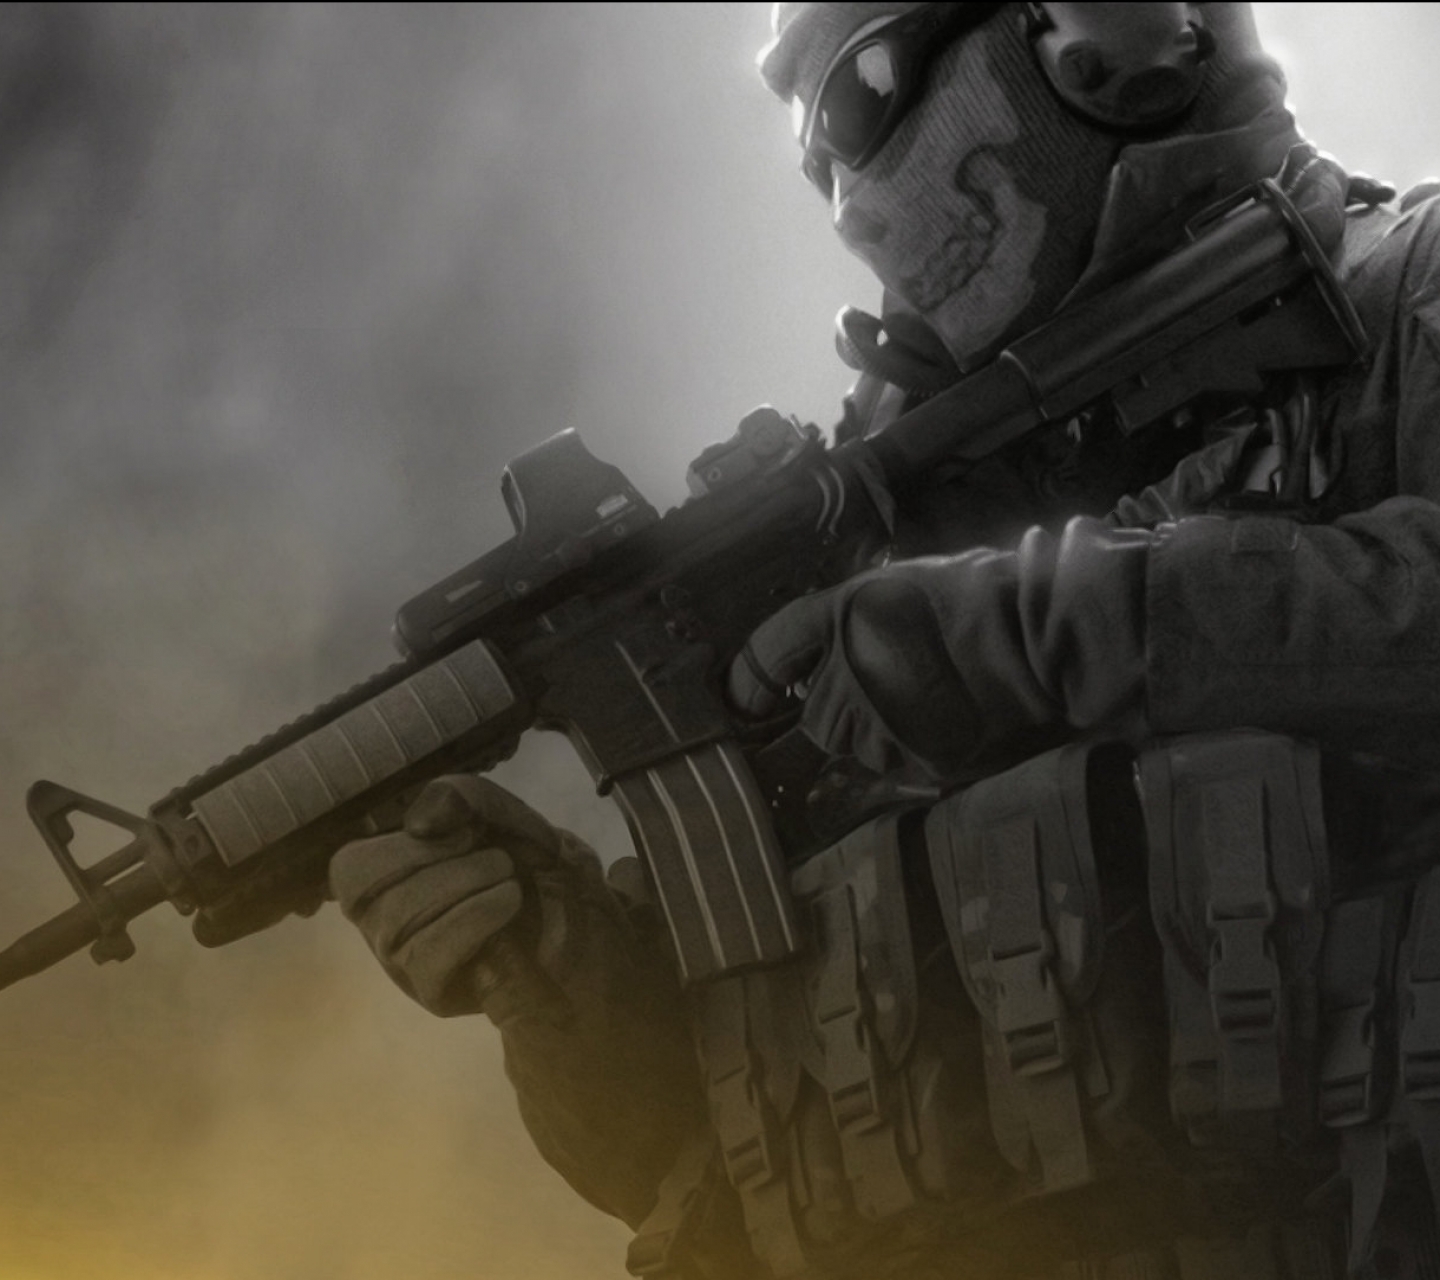 Скачать обои бесплатно Call Of Duty, Видеоигры, Call Of Duty Modern Warfare 2 картинка на рабочий стол ПК